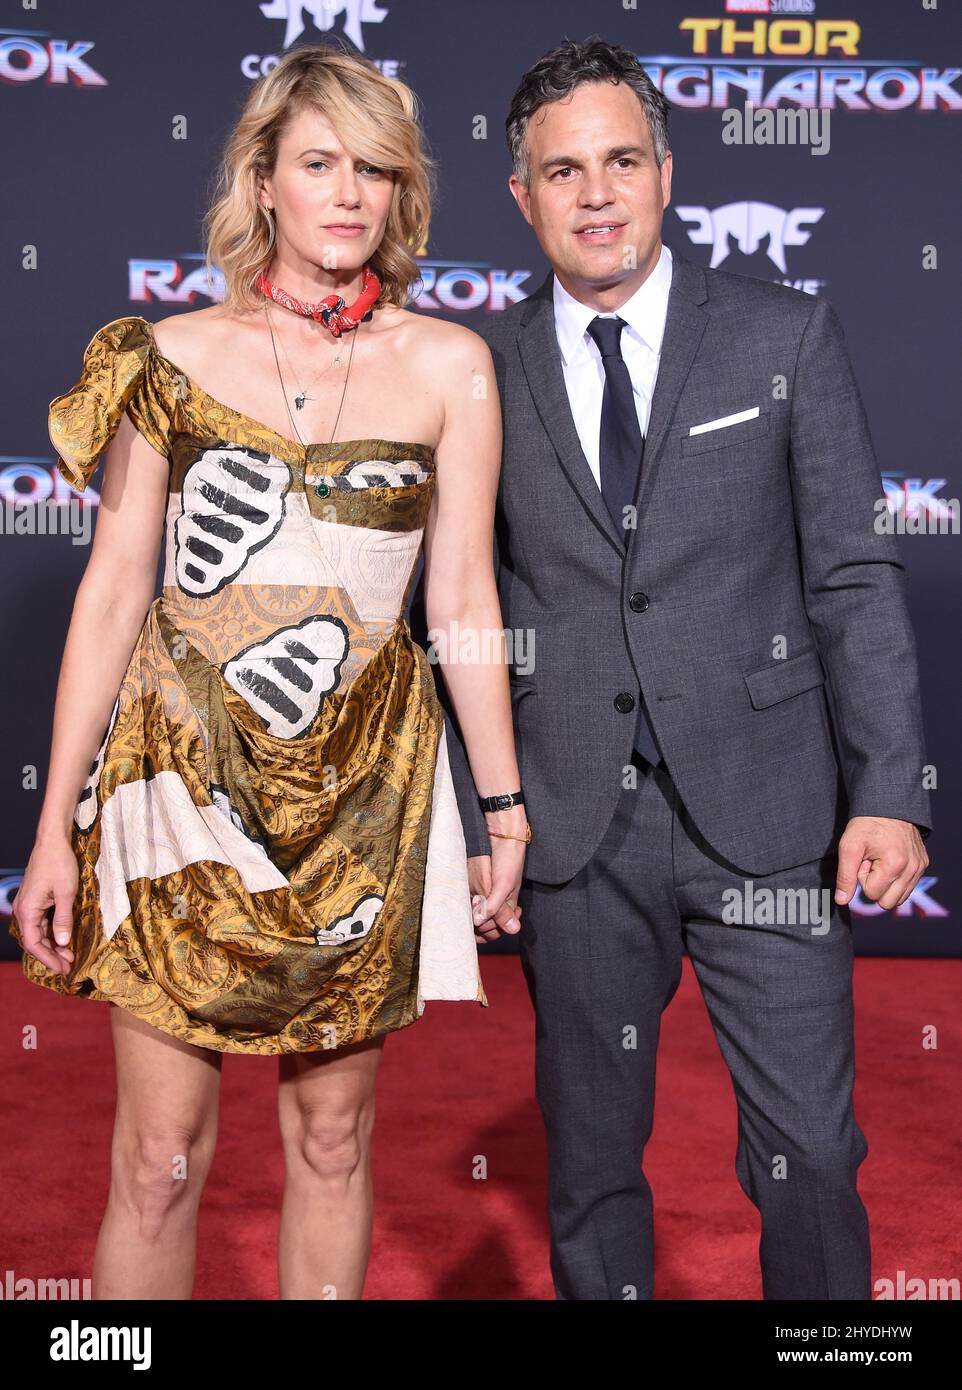 Mark Ruffalo and Sunrise Coigney attending Marvel's 'Thor: Ragnarok' World Premiere held at the El Capitan Theatre Stock Photo